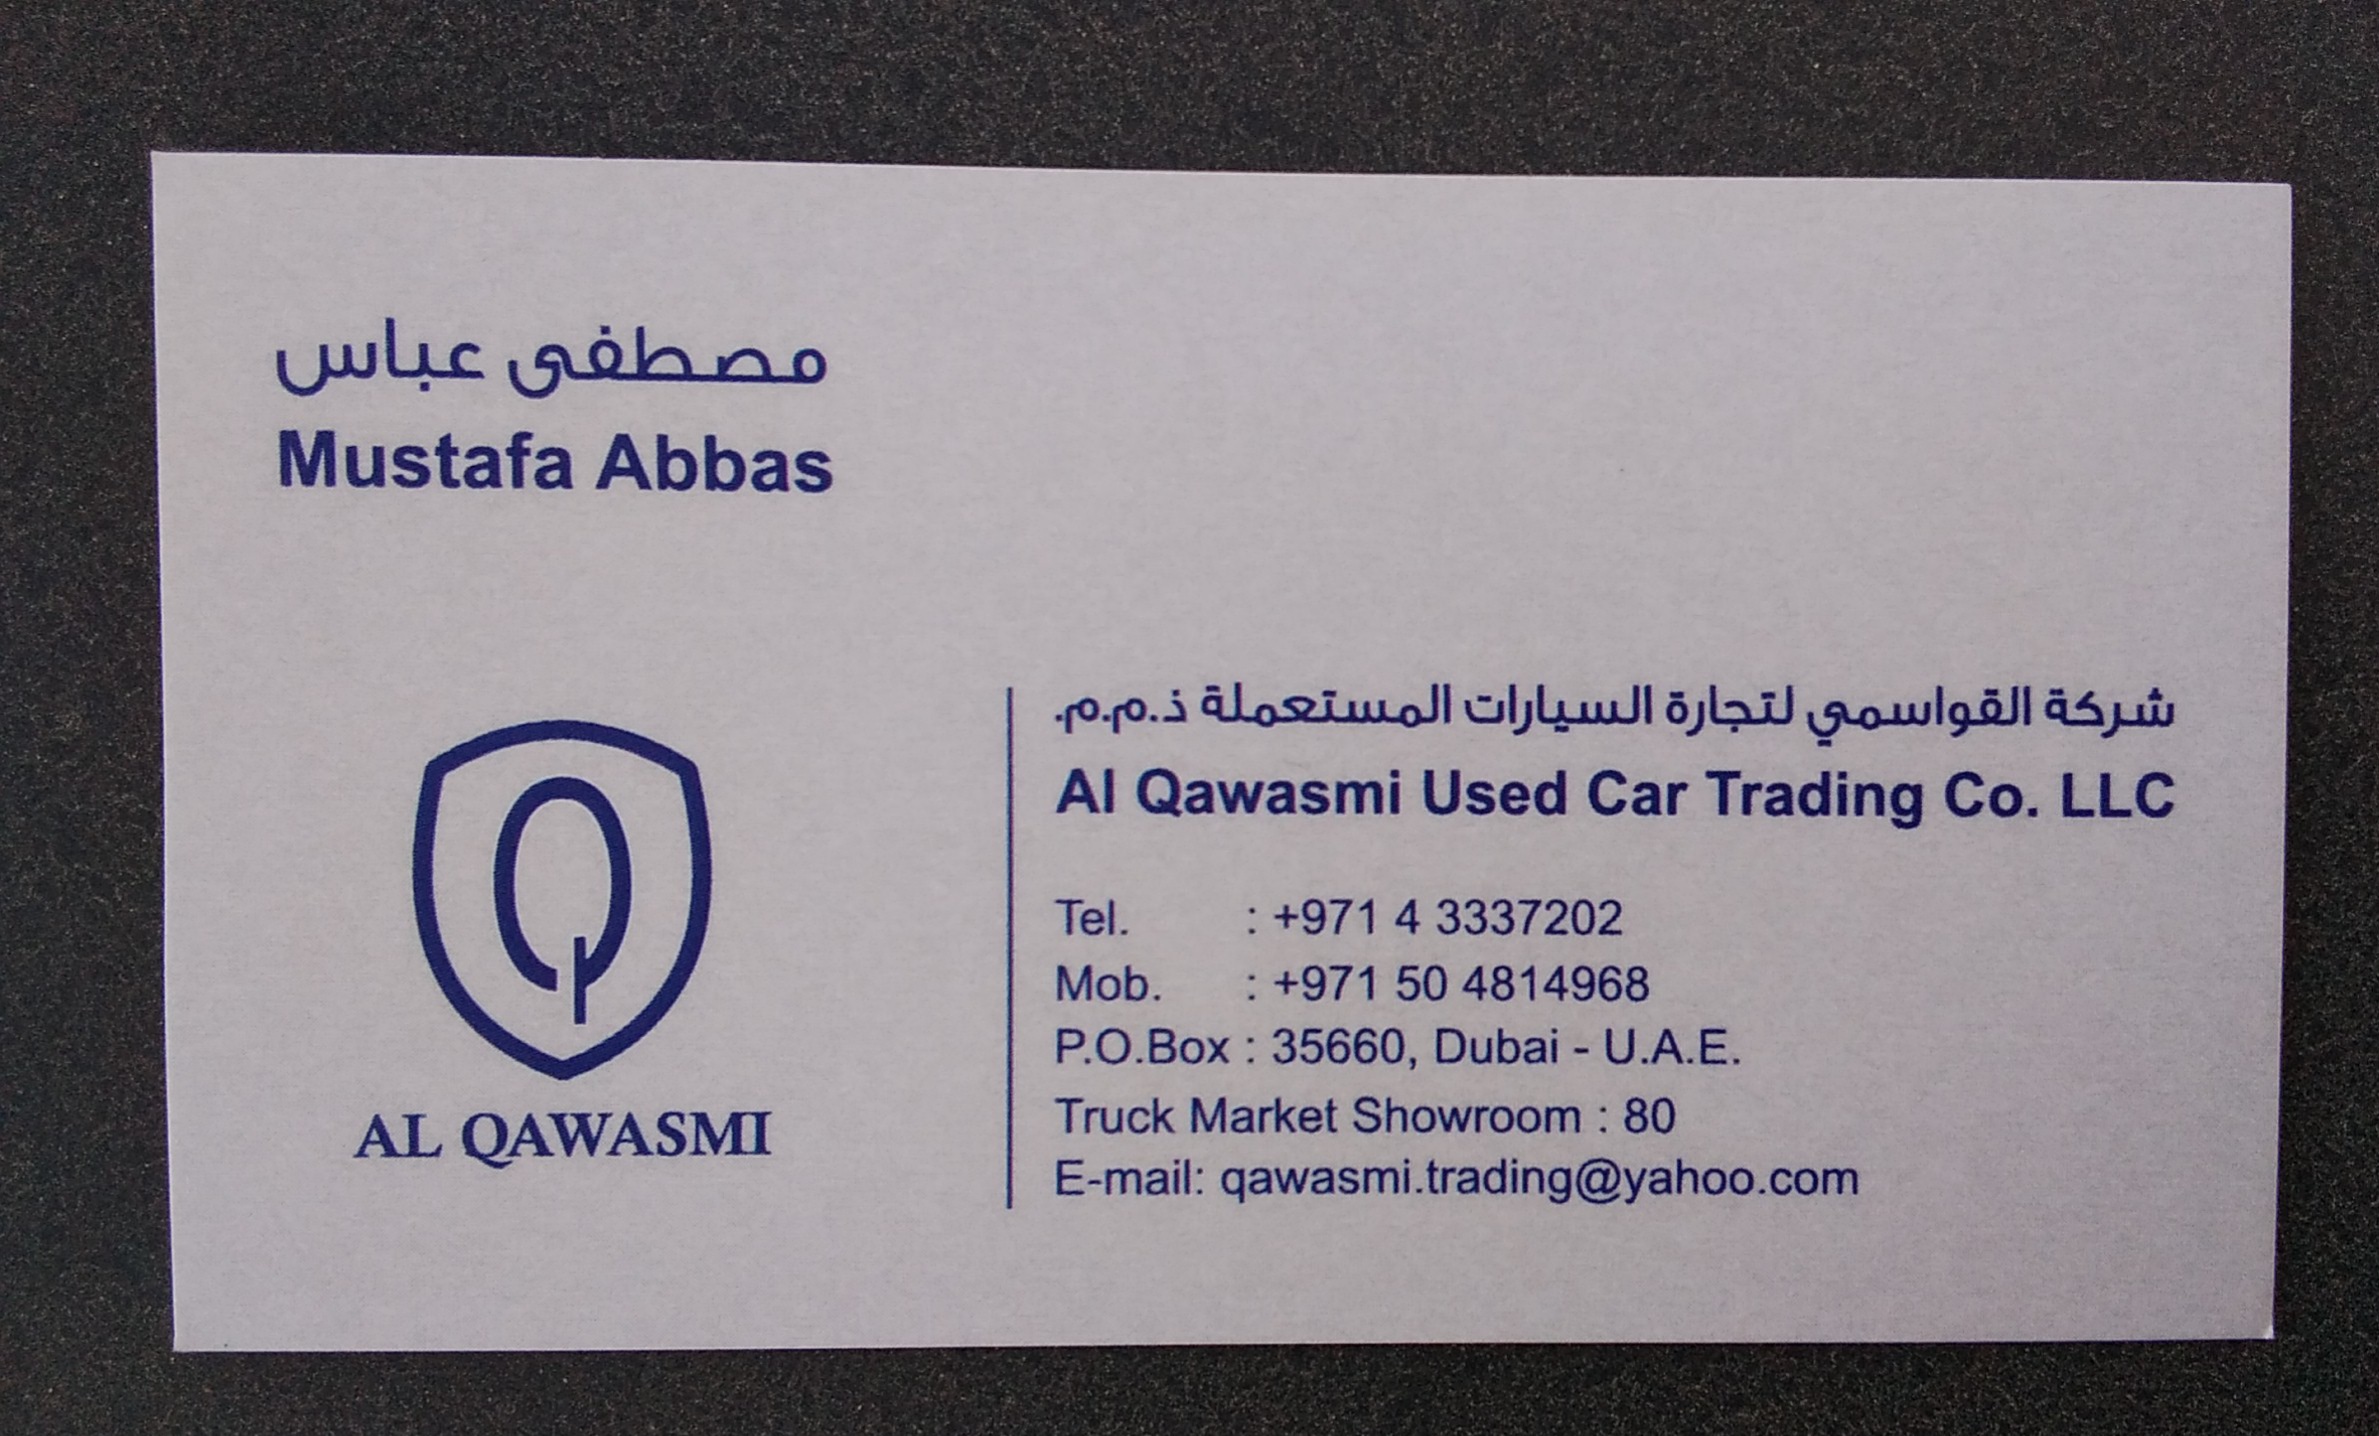 Al Qawasmi Used Car Trading Co. LLC 80